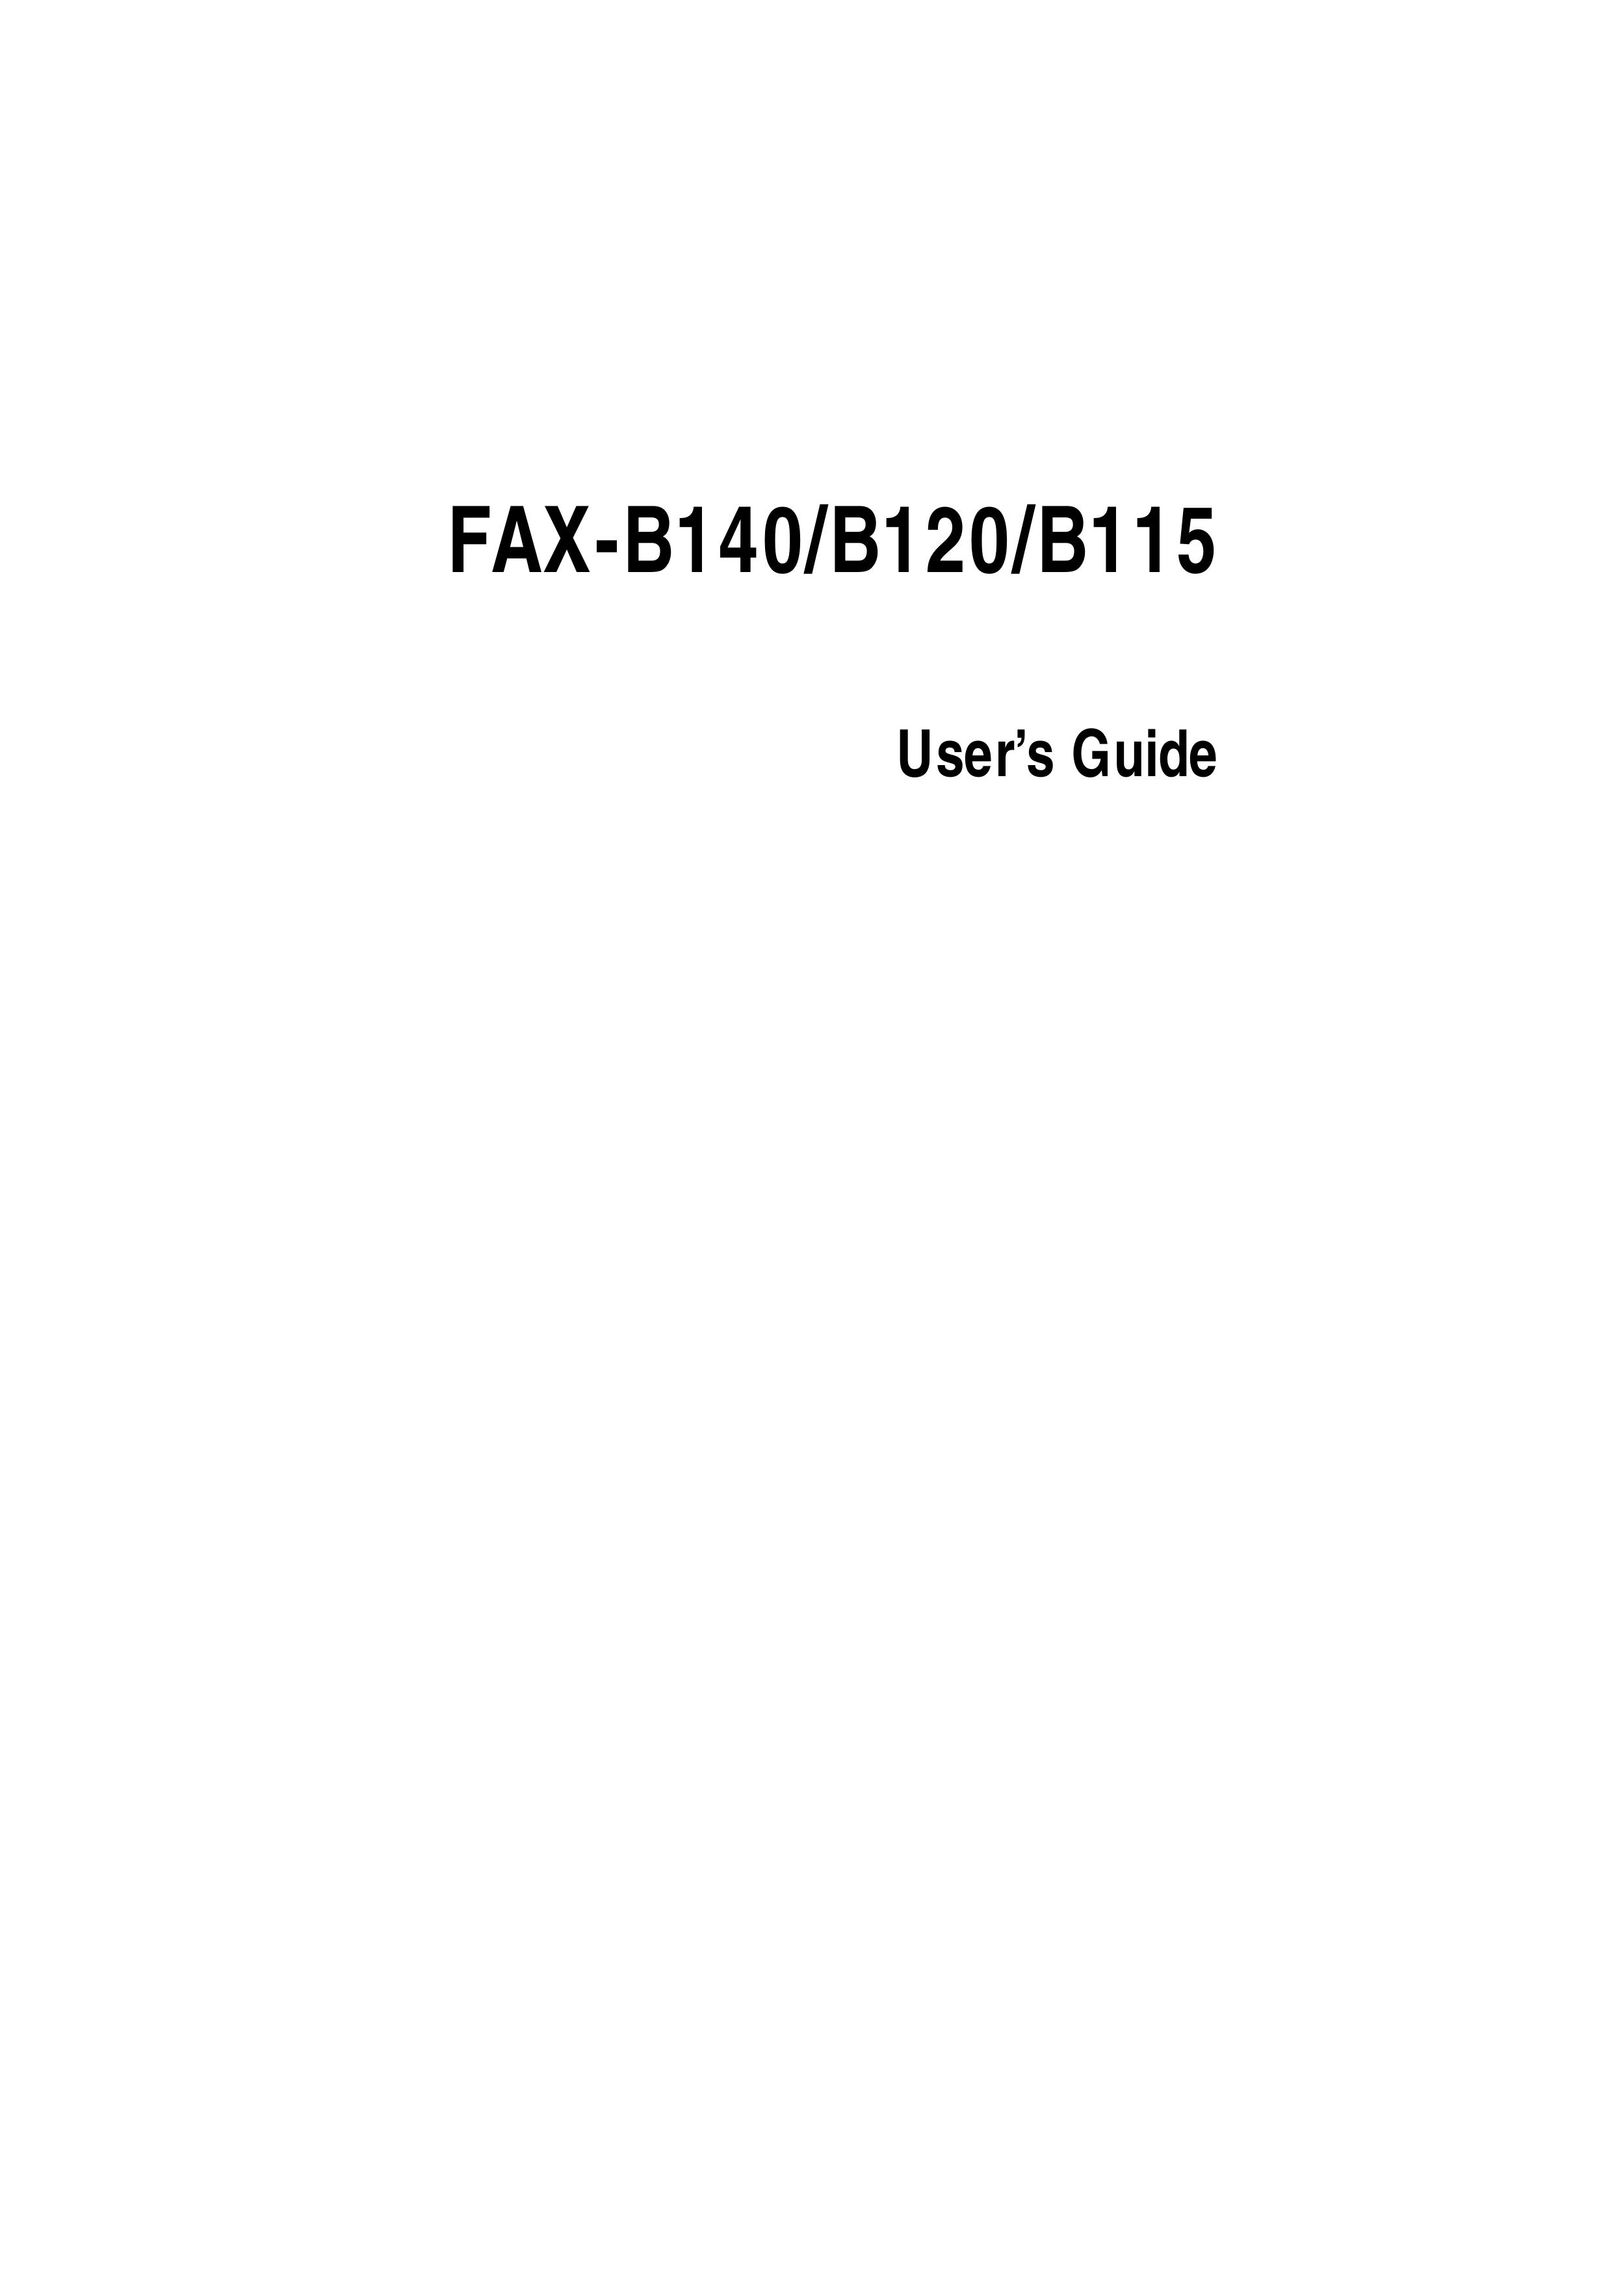 Canon B115 Fax Machine User Manual